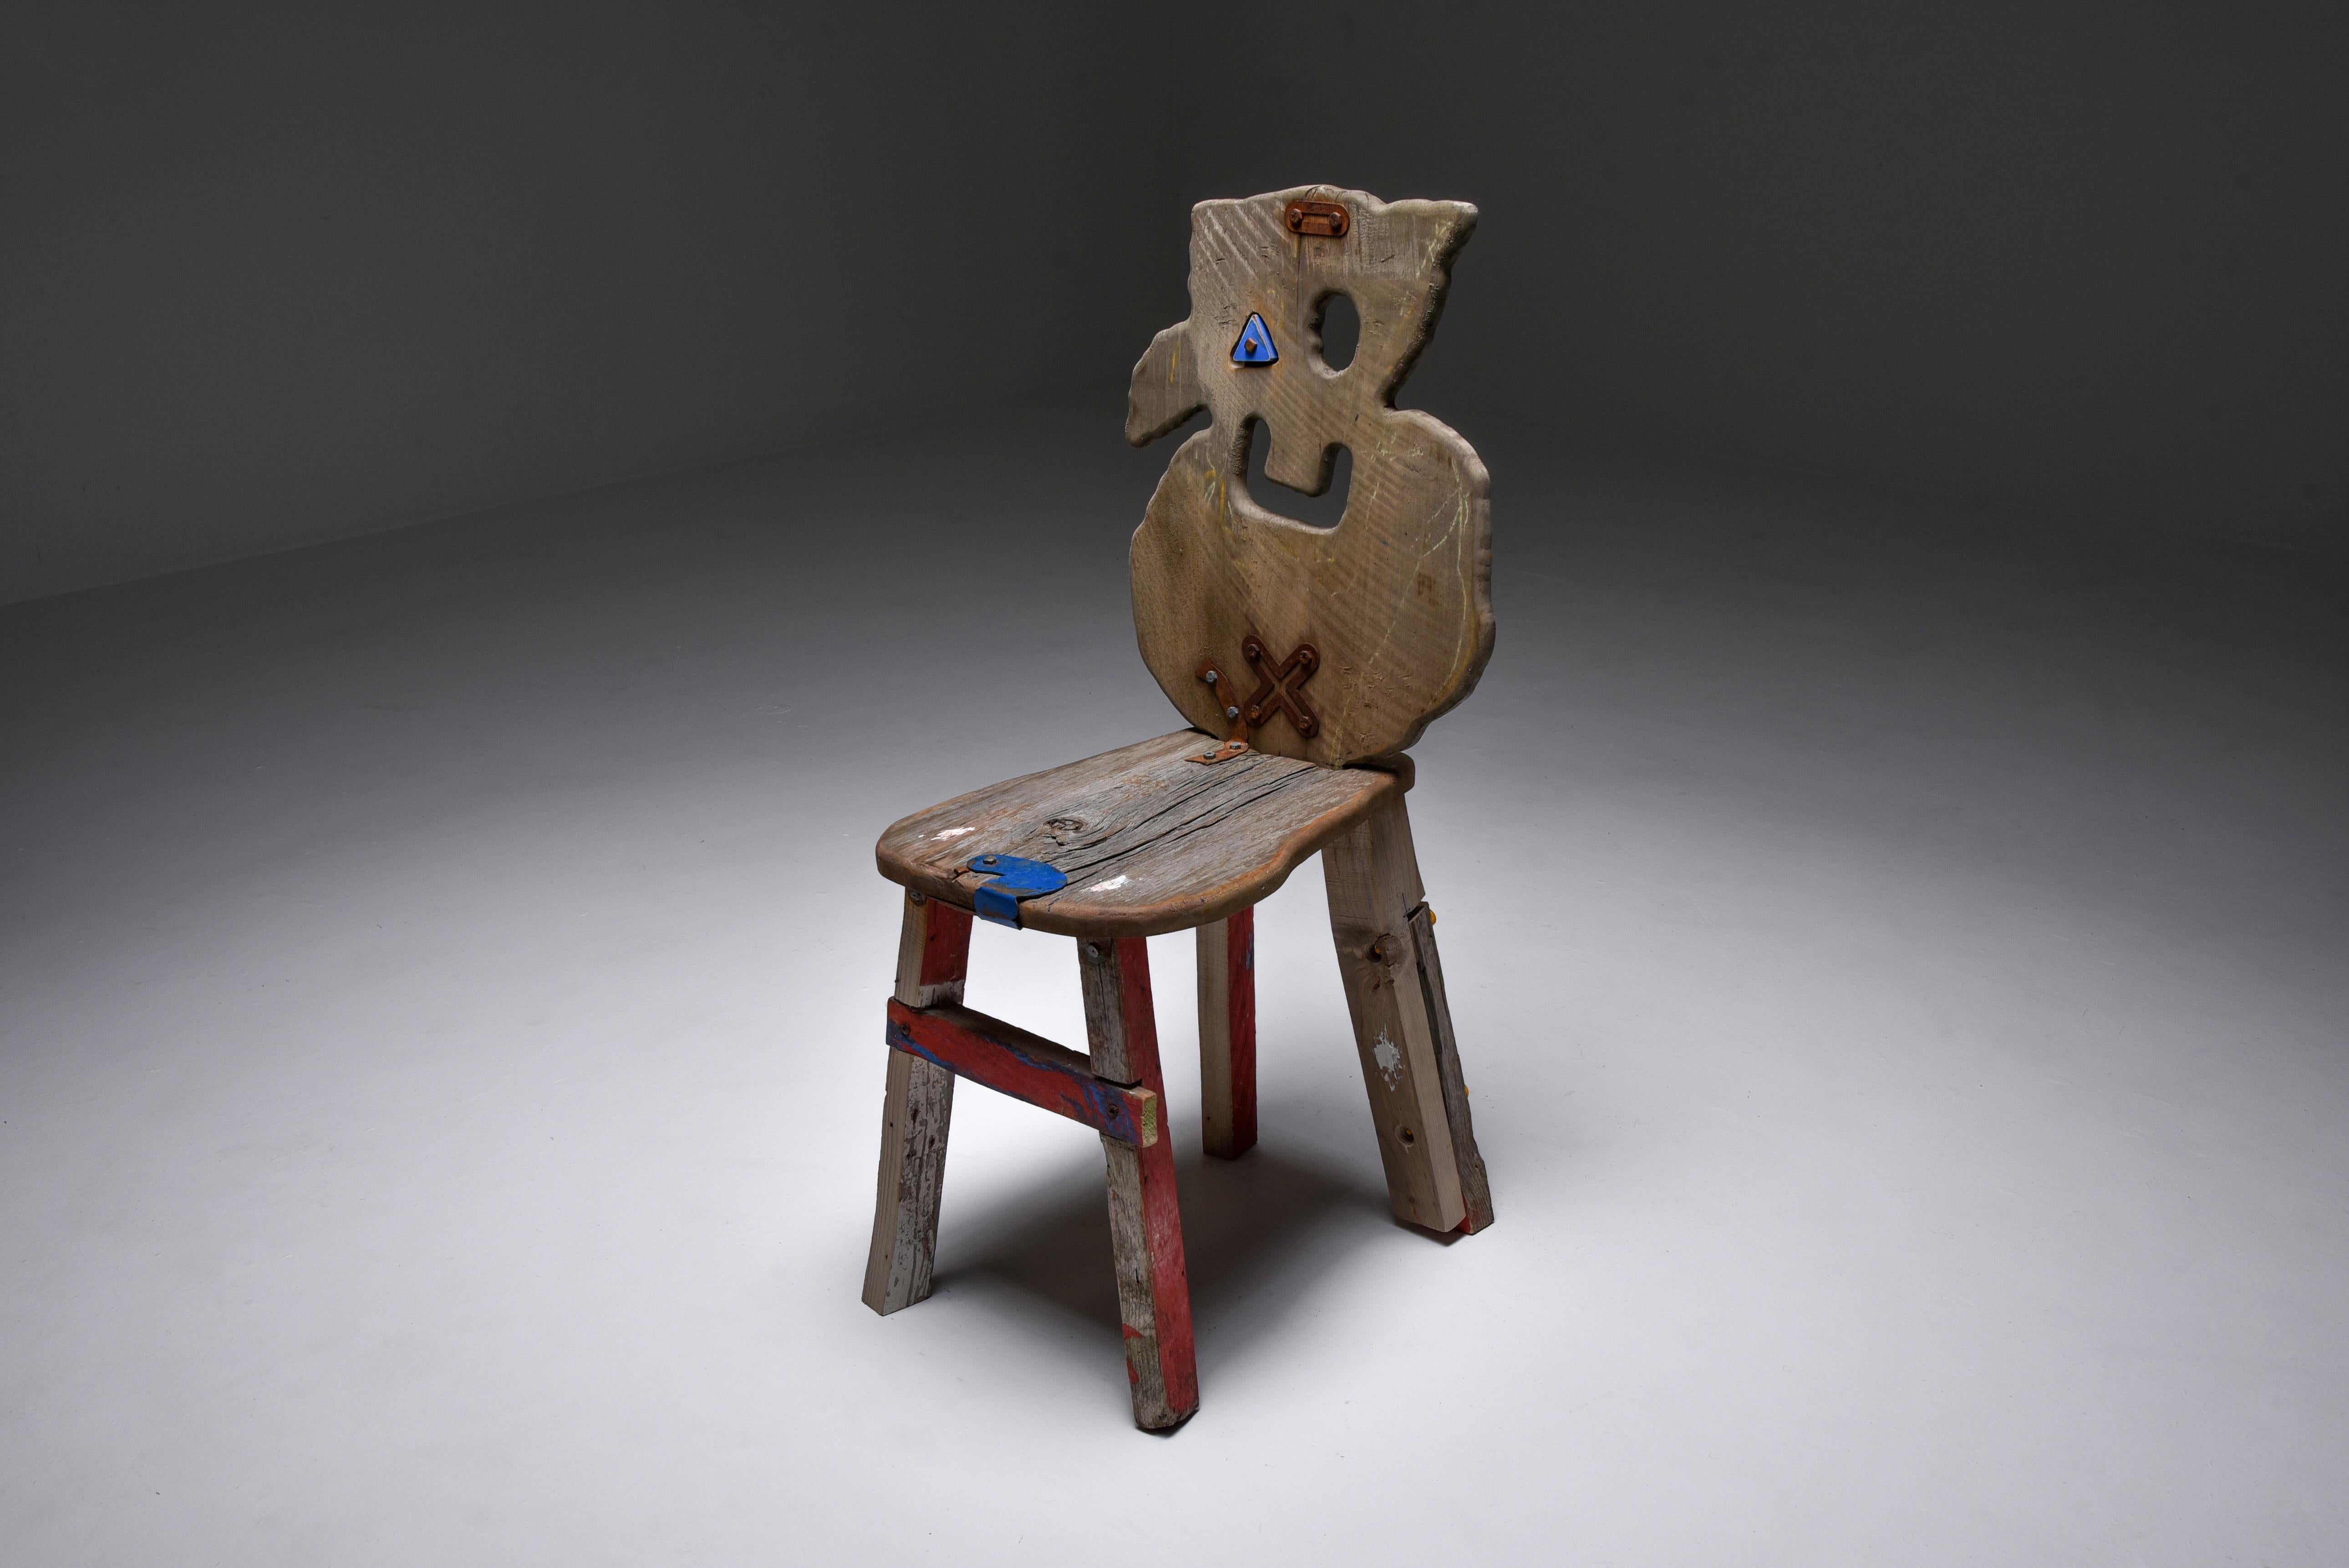 Serban Ionescu; Folks Series; Functional Art; Sculpture chair; Armchair; Sidechair; Conversation Piece; Art;

Folks 33, 2021

This unique piece was on view in the exhibition 